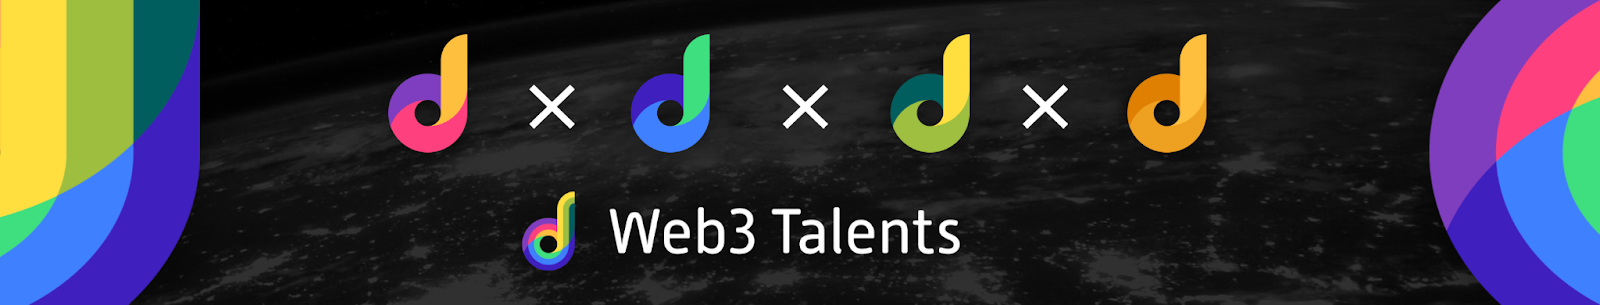 Web3 Talents Banner